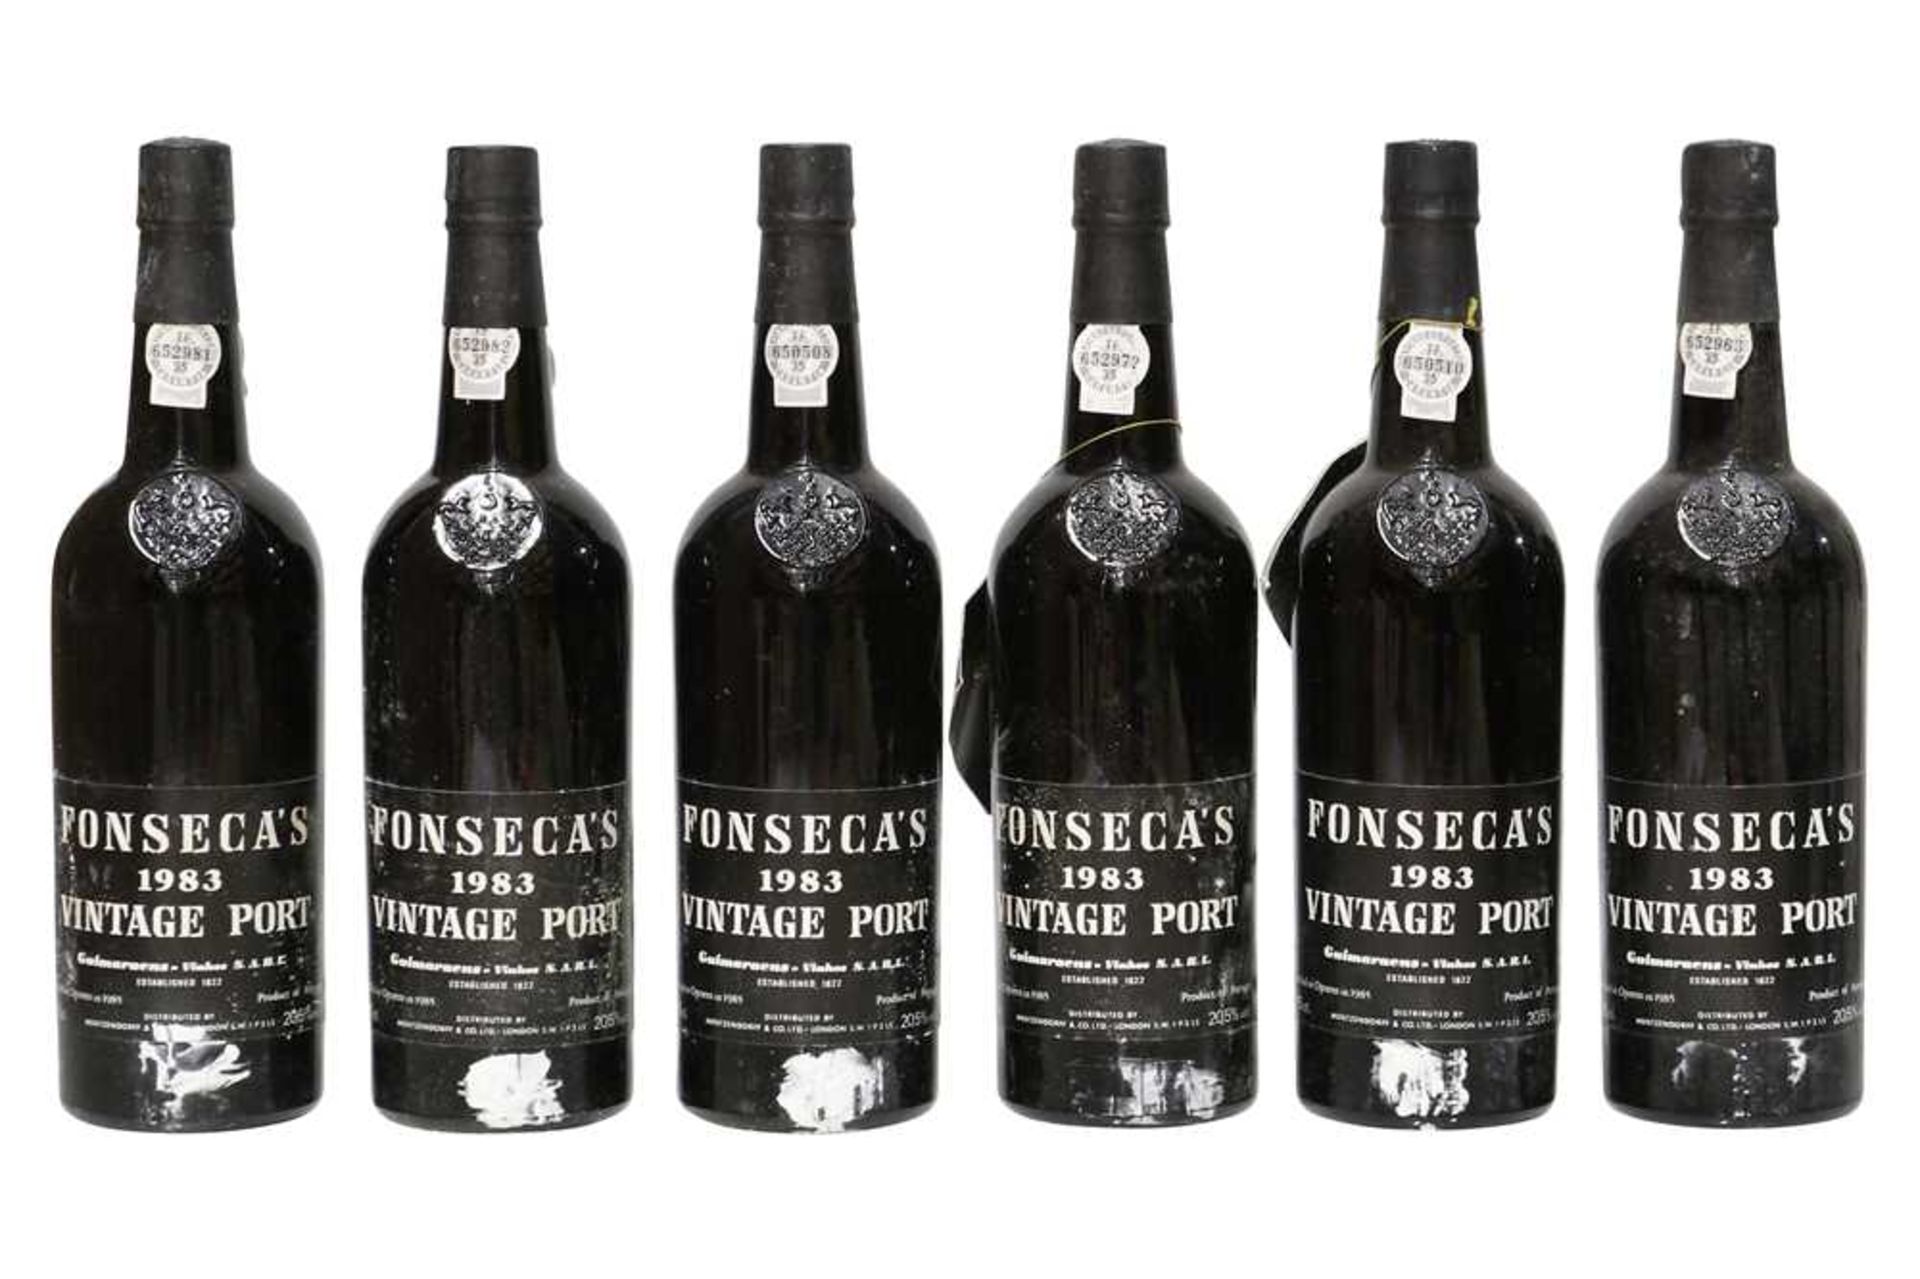 Fonseca, Vintage Port, 1983, six bottles